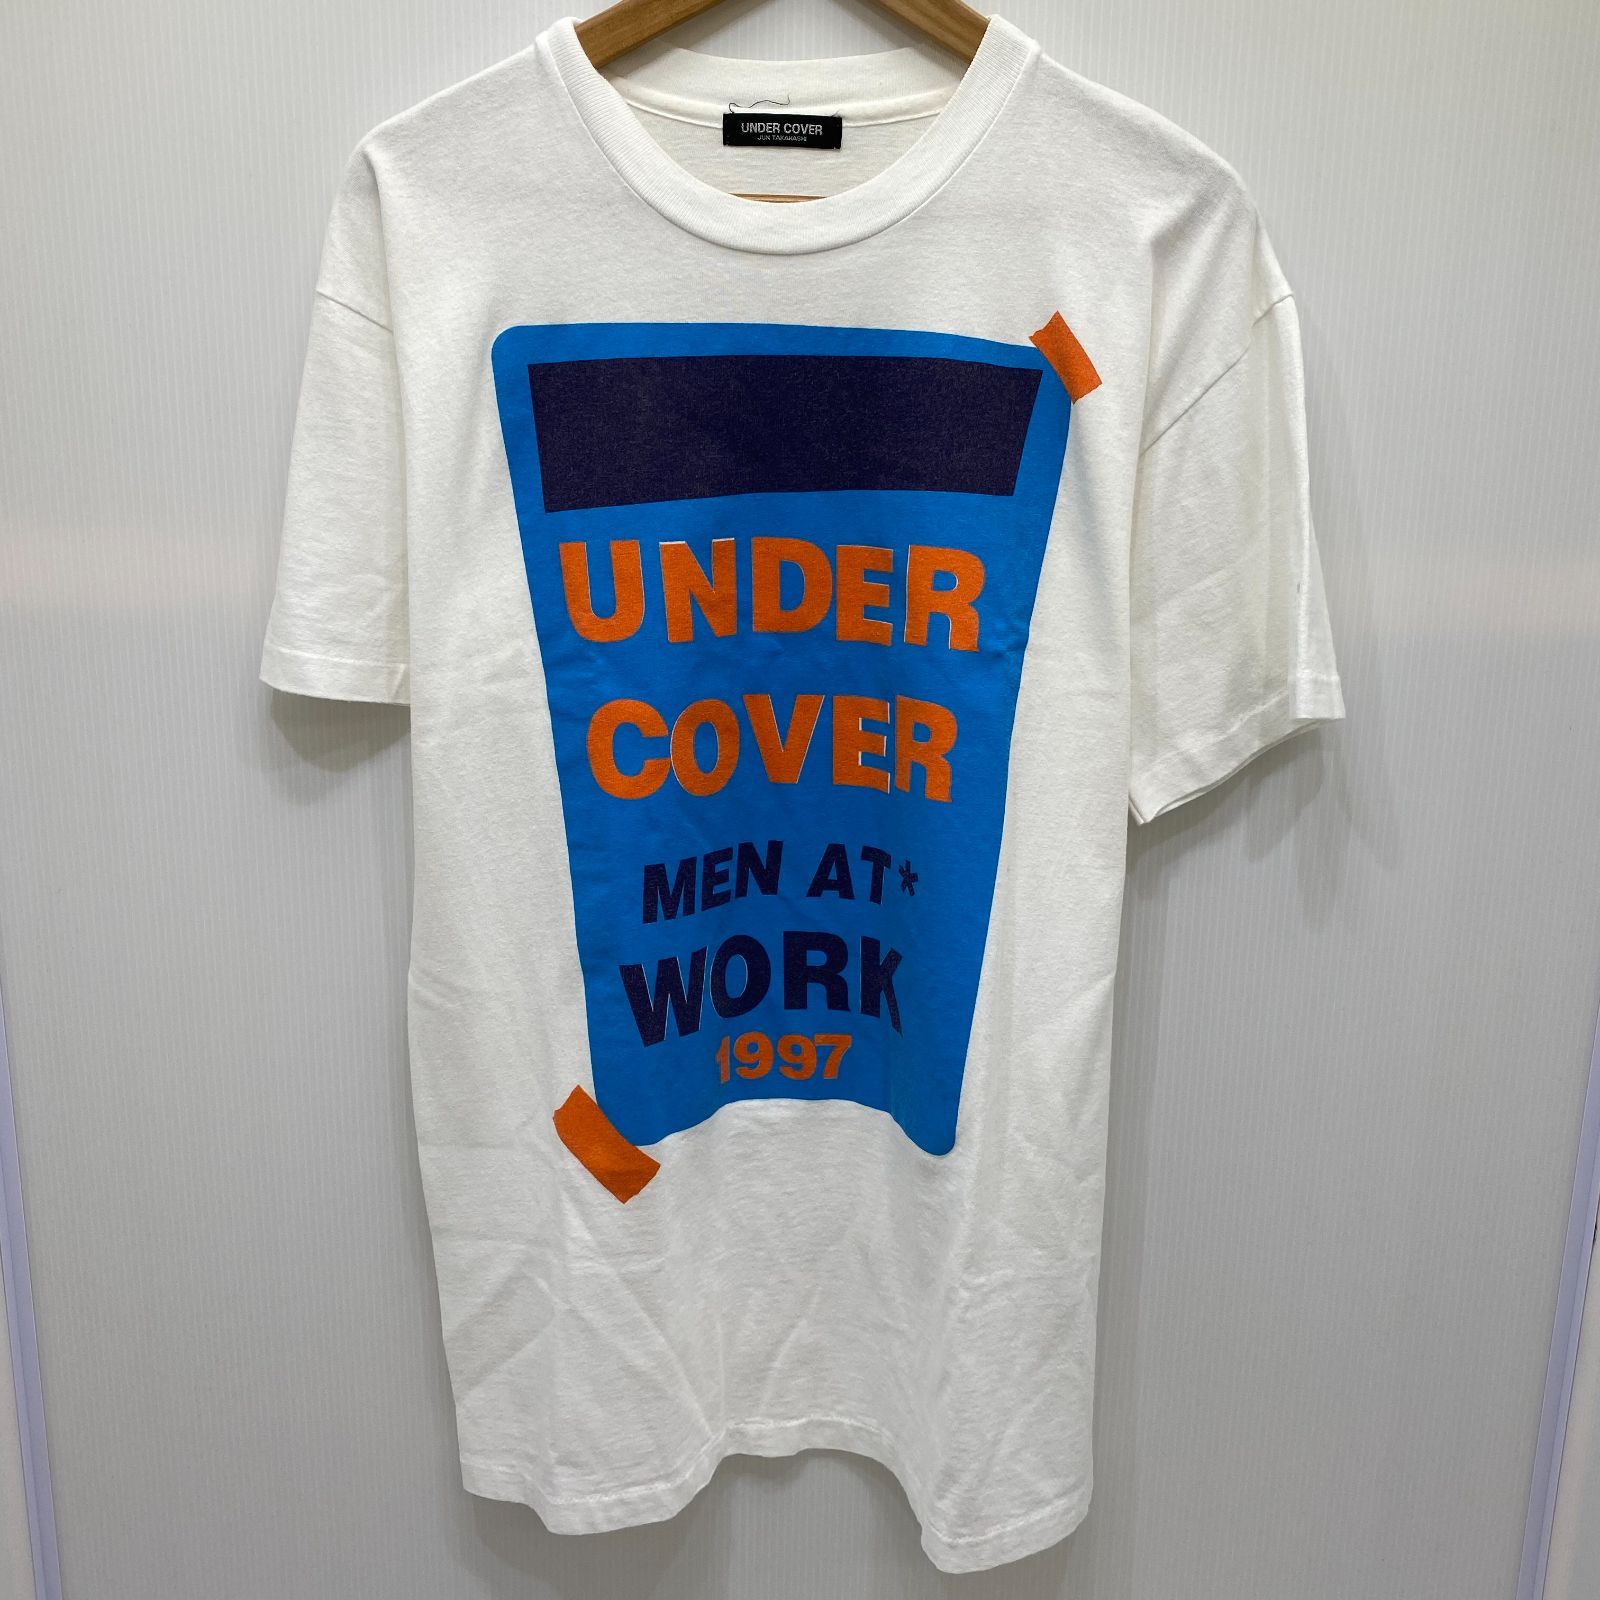 UNDERCOVER MEN AT* WORK 1997 半袖Tシャツ ホワイト プリントロゴ 